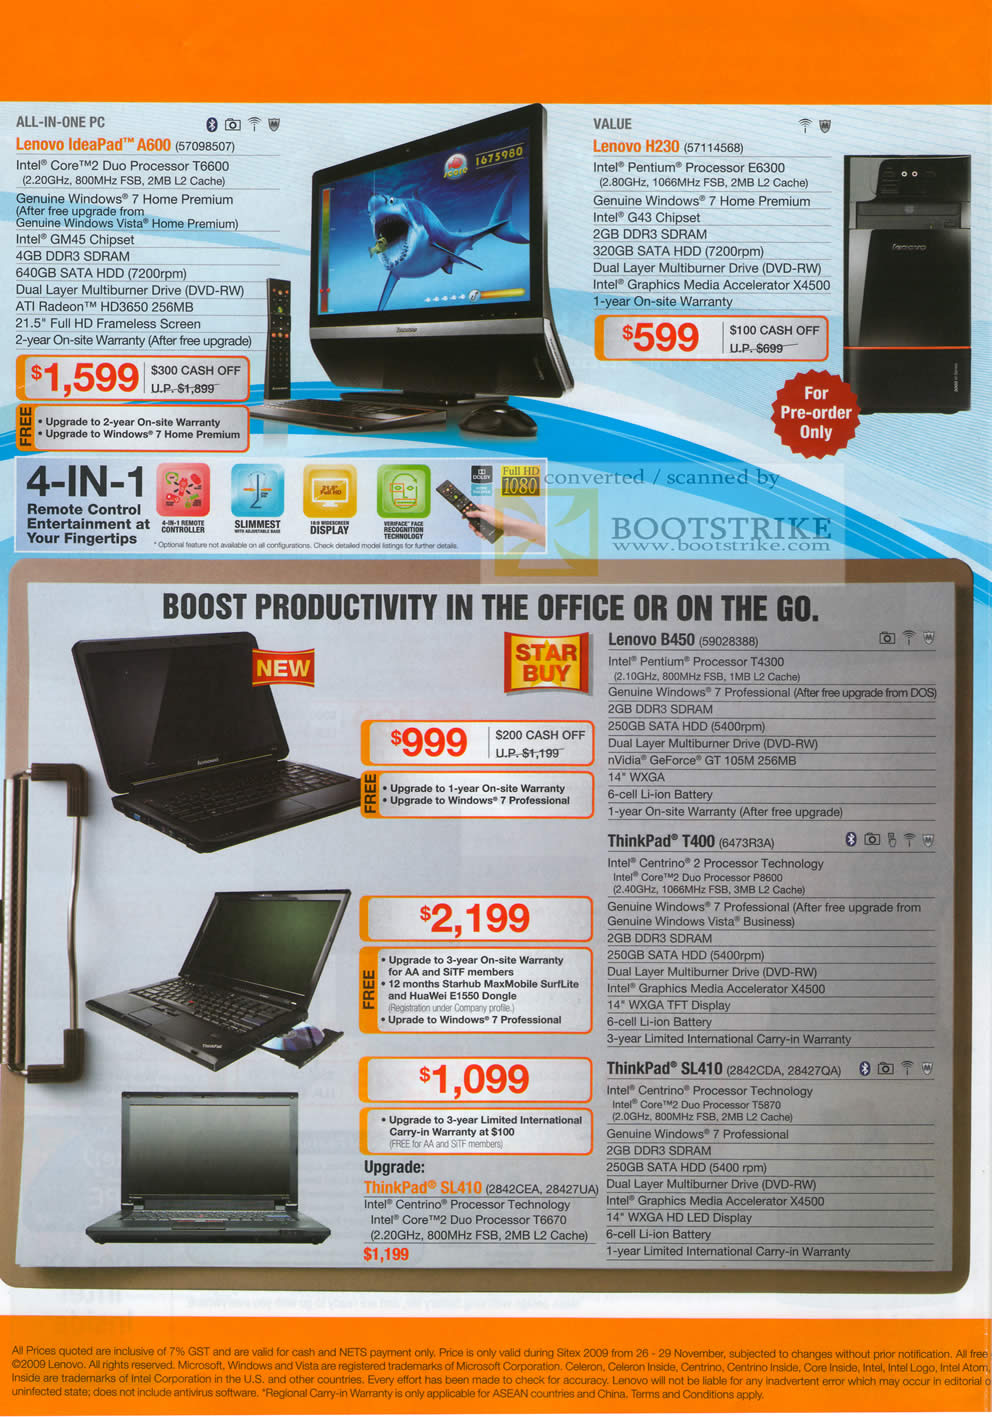 Sitex 2009 price list image brochure of Lenovo Desktop PC IdeaPad A600 ThinkPad Notebooks H230 B450 T400 SL410